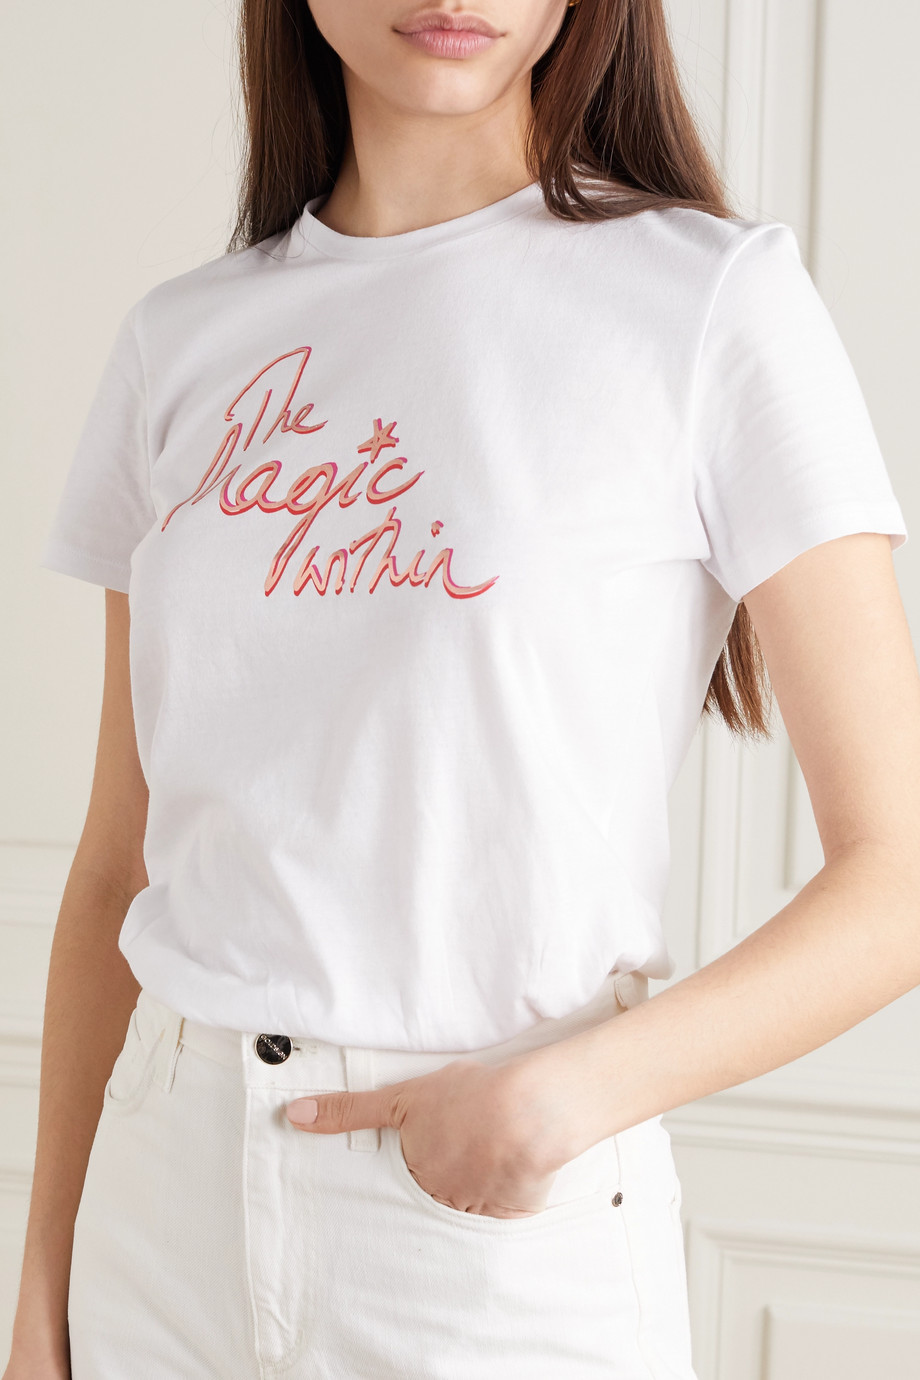 Net-a-Porter x Charlotte Tilbury International Women's Day T-shirt 2020.